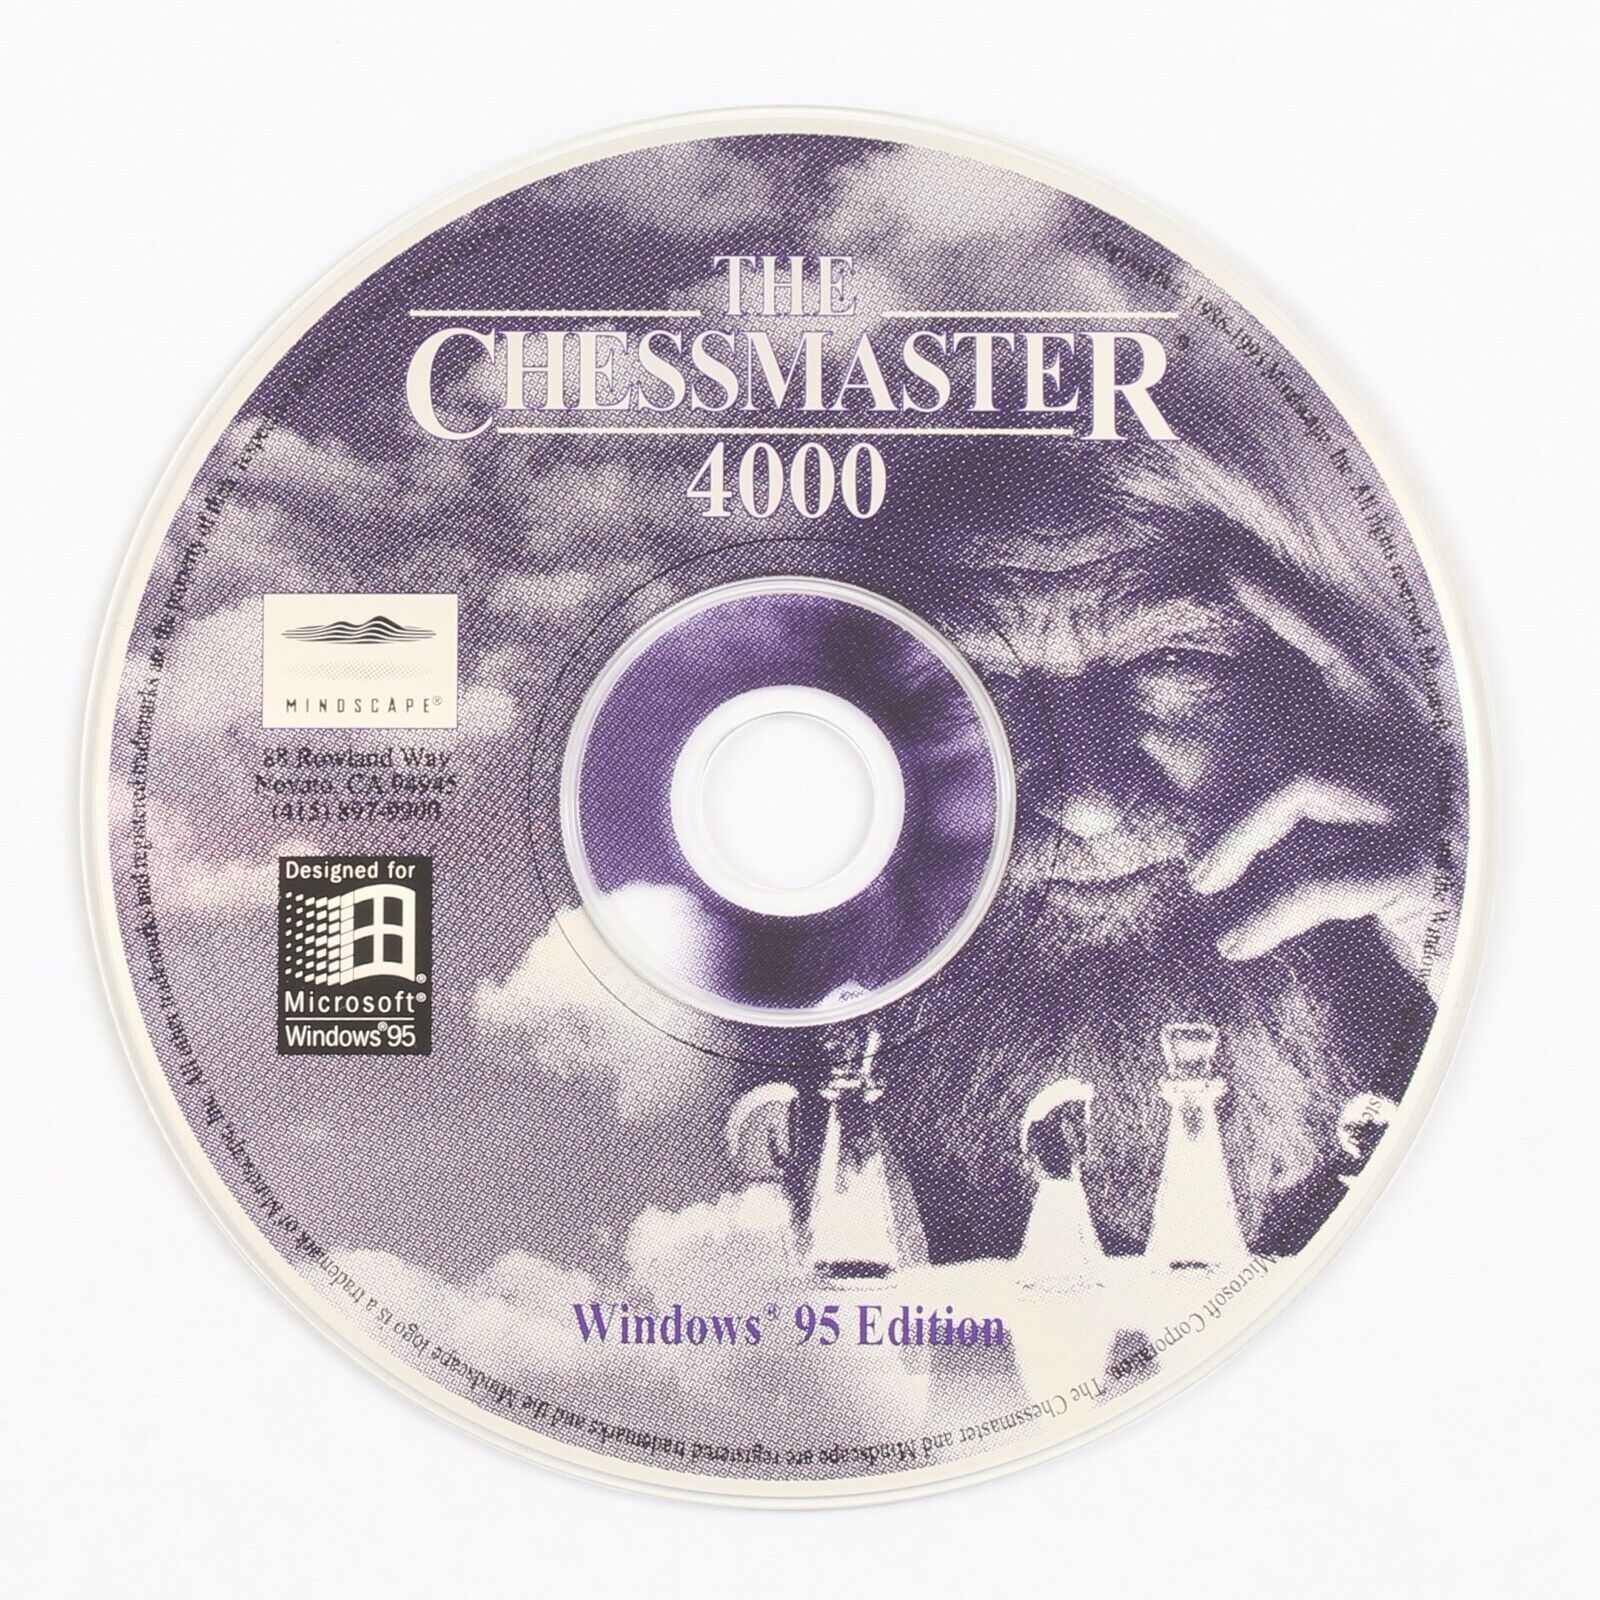 The Chessmaster 4000 PC CD-ROM game for Older Windows 95 PCs *DISC ONLY*